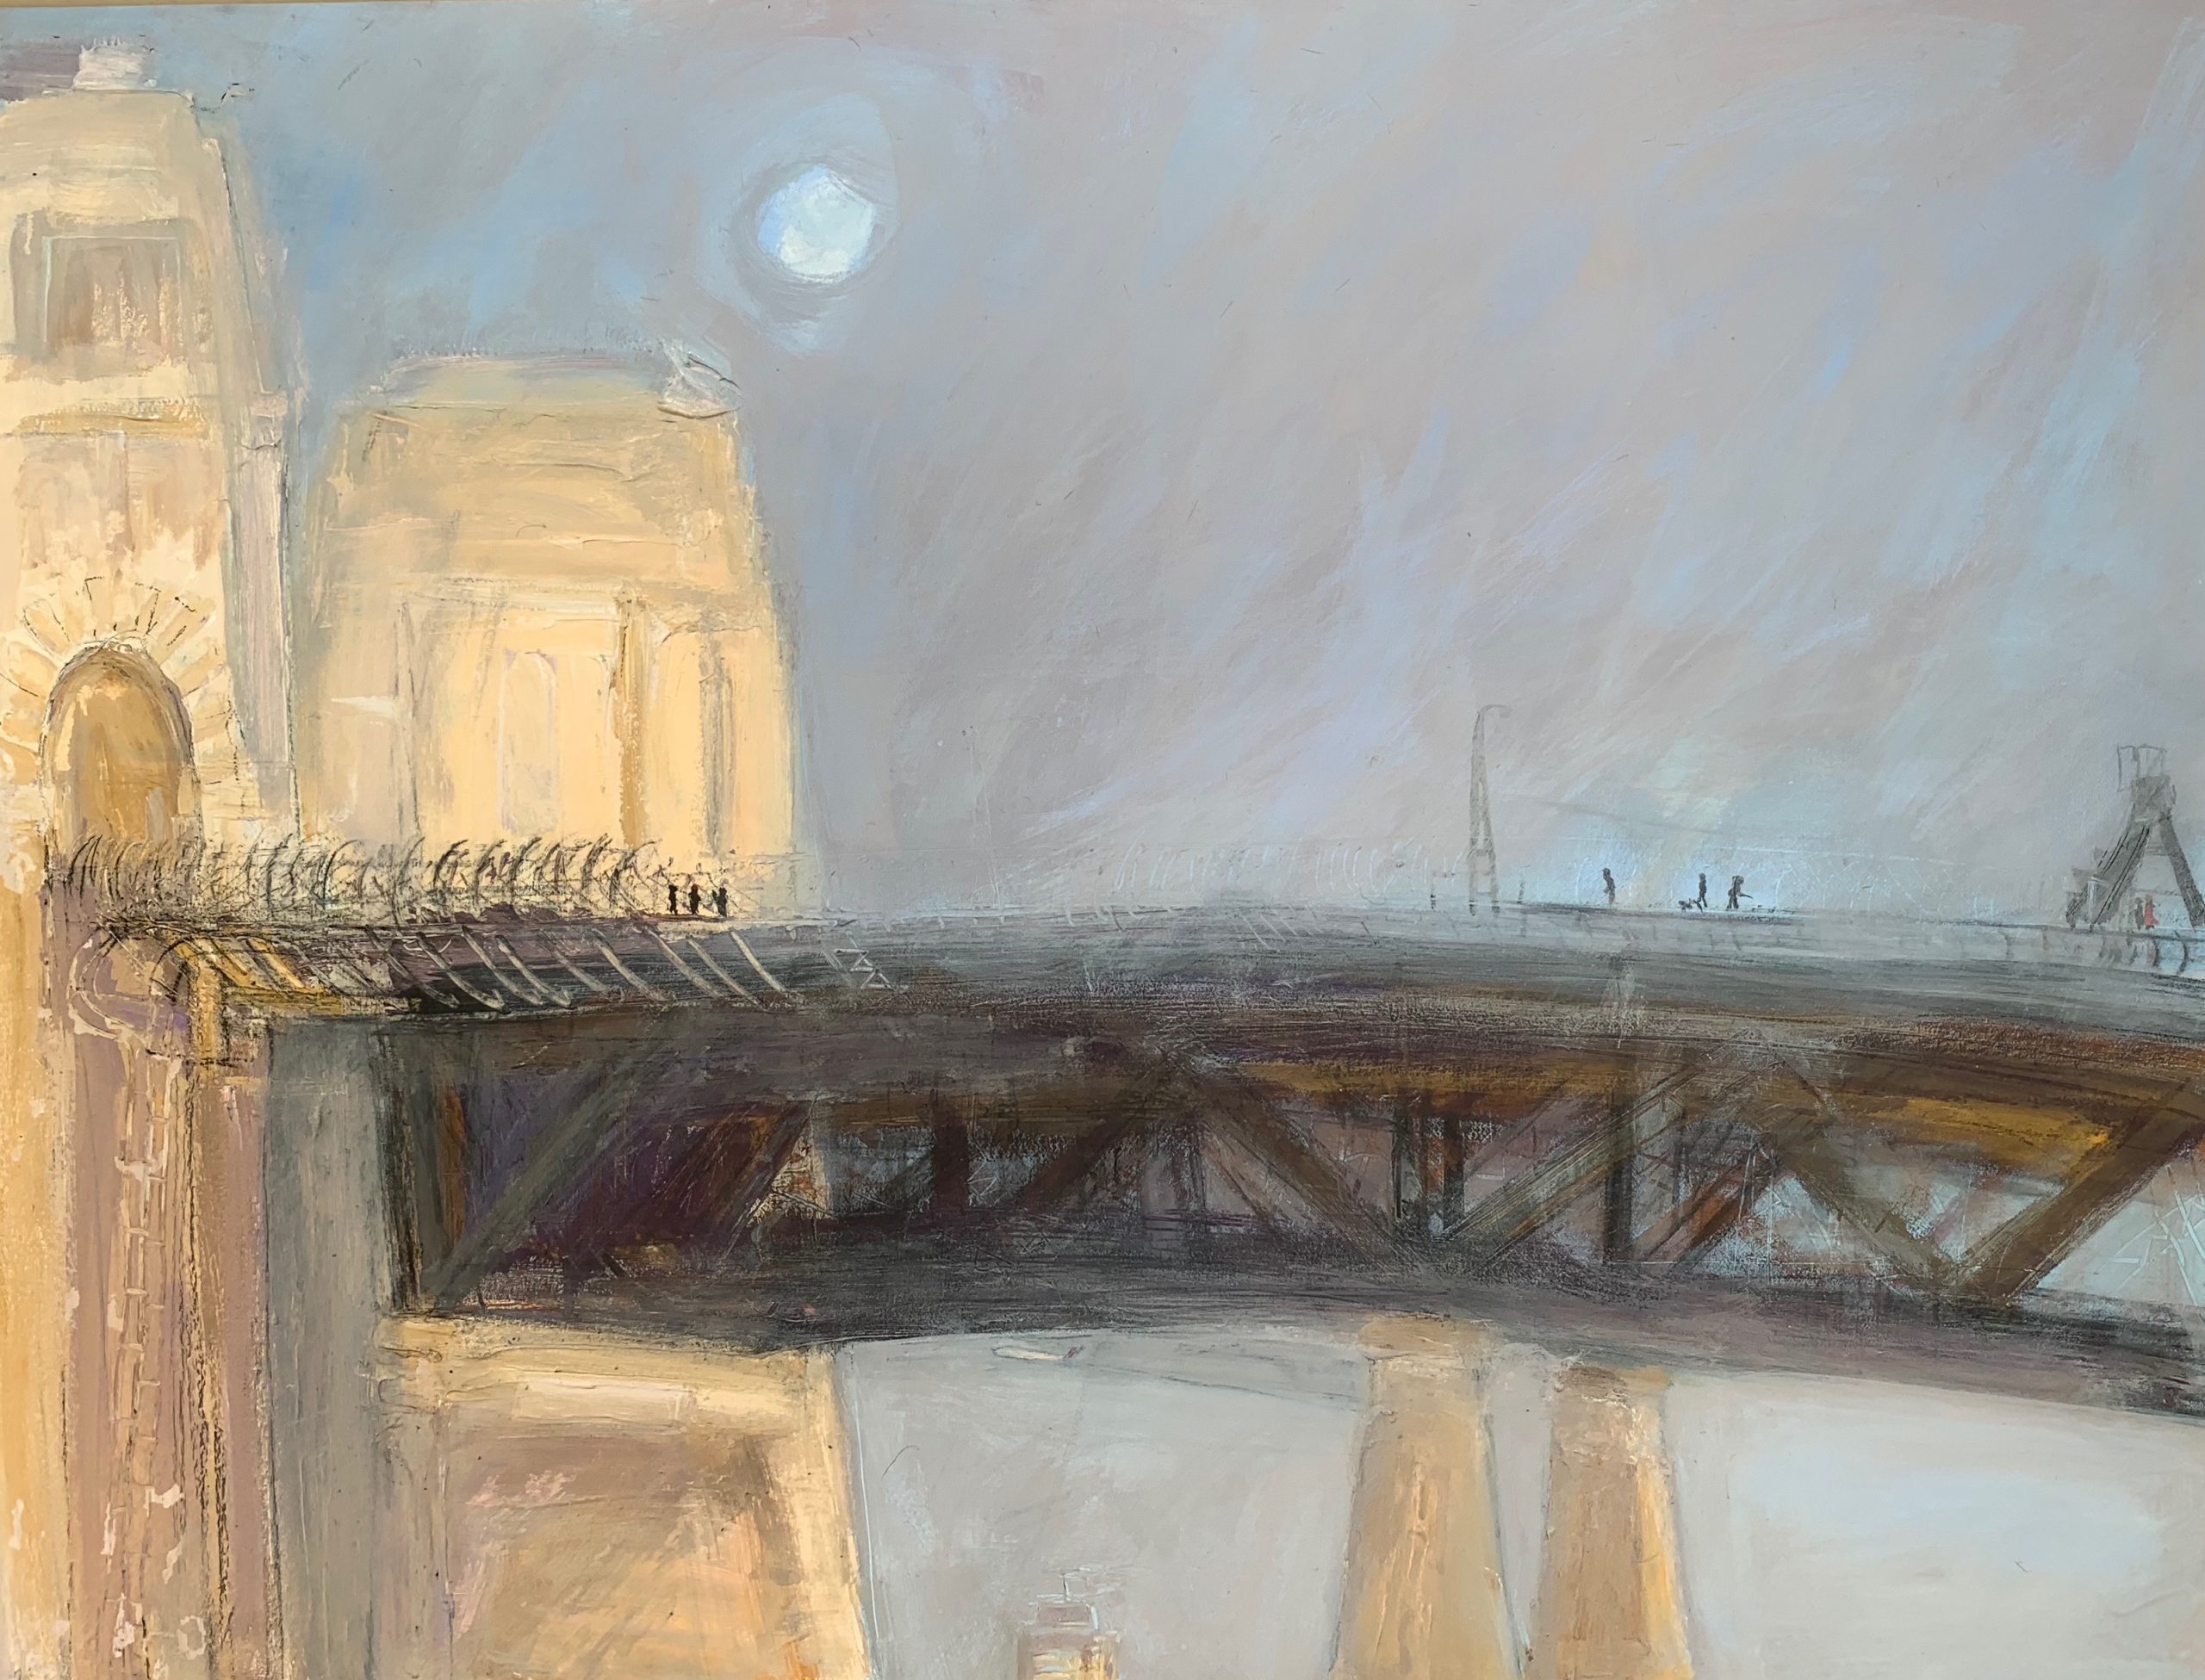 Bushfire Bridge-Plein air-Gouache,charcoal and ink on paper-102cm x 140cm-David K Wiggs 2019